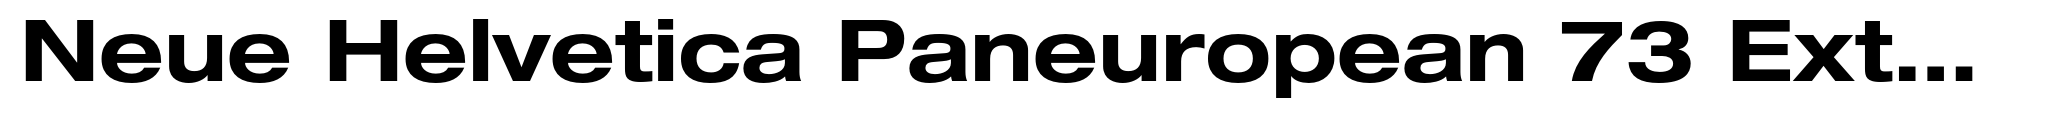 Neue Helvetica Paneuropean 73 Extended Bold image